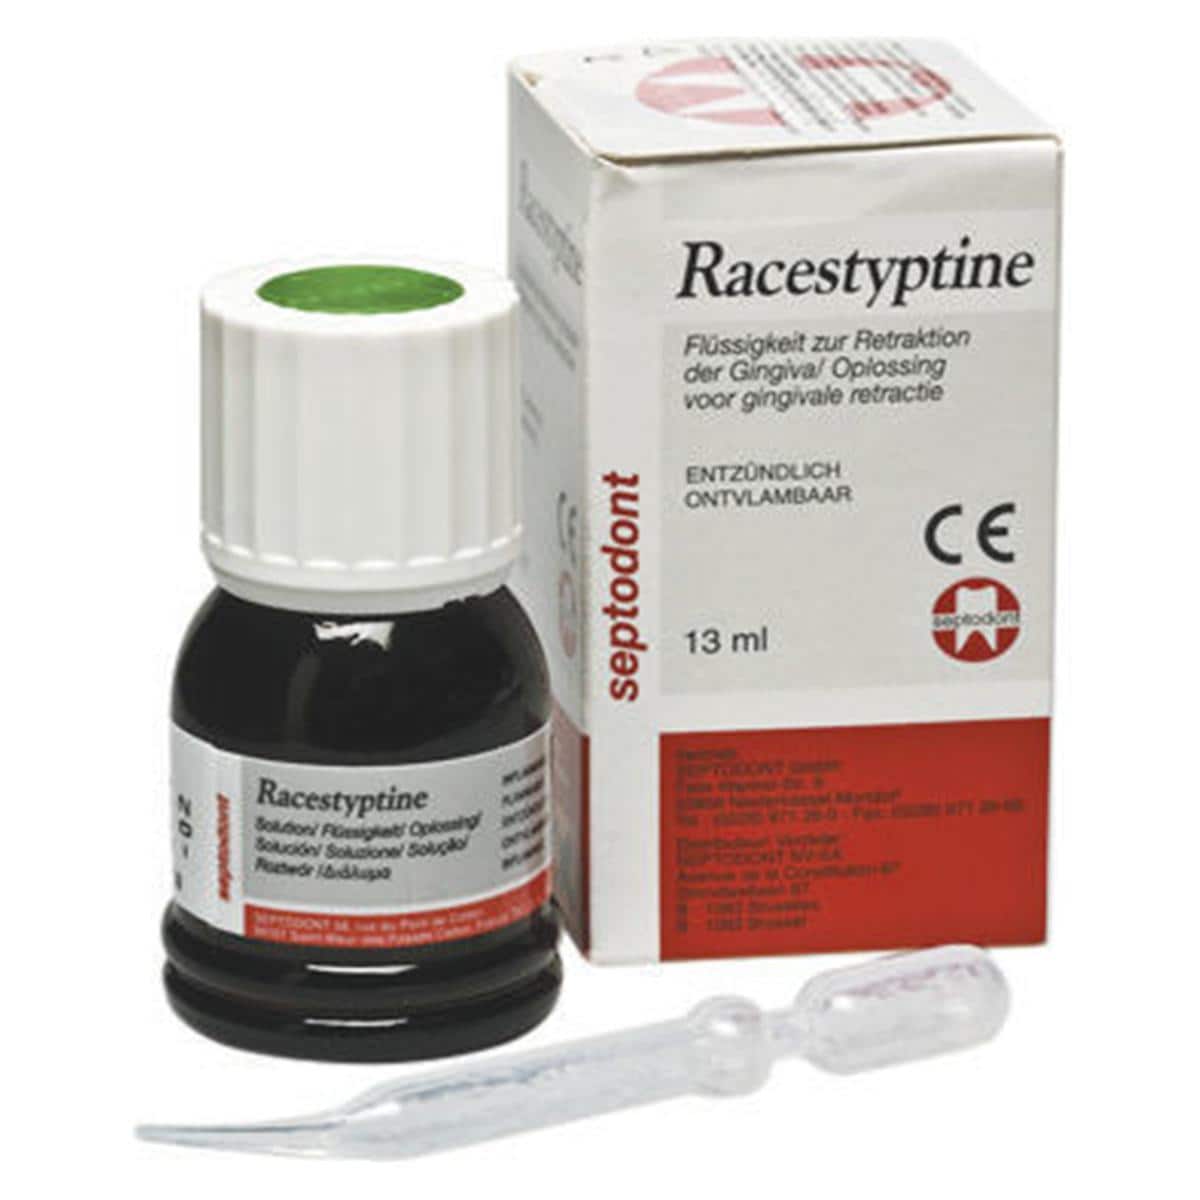 Racéstyptine-Lösung - Packung 13 ml